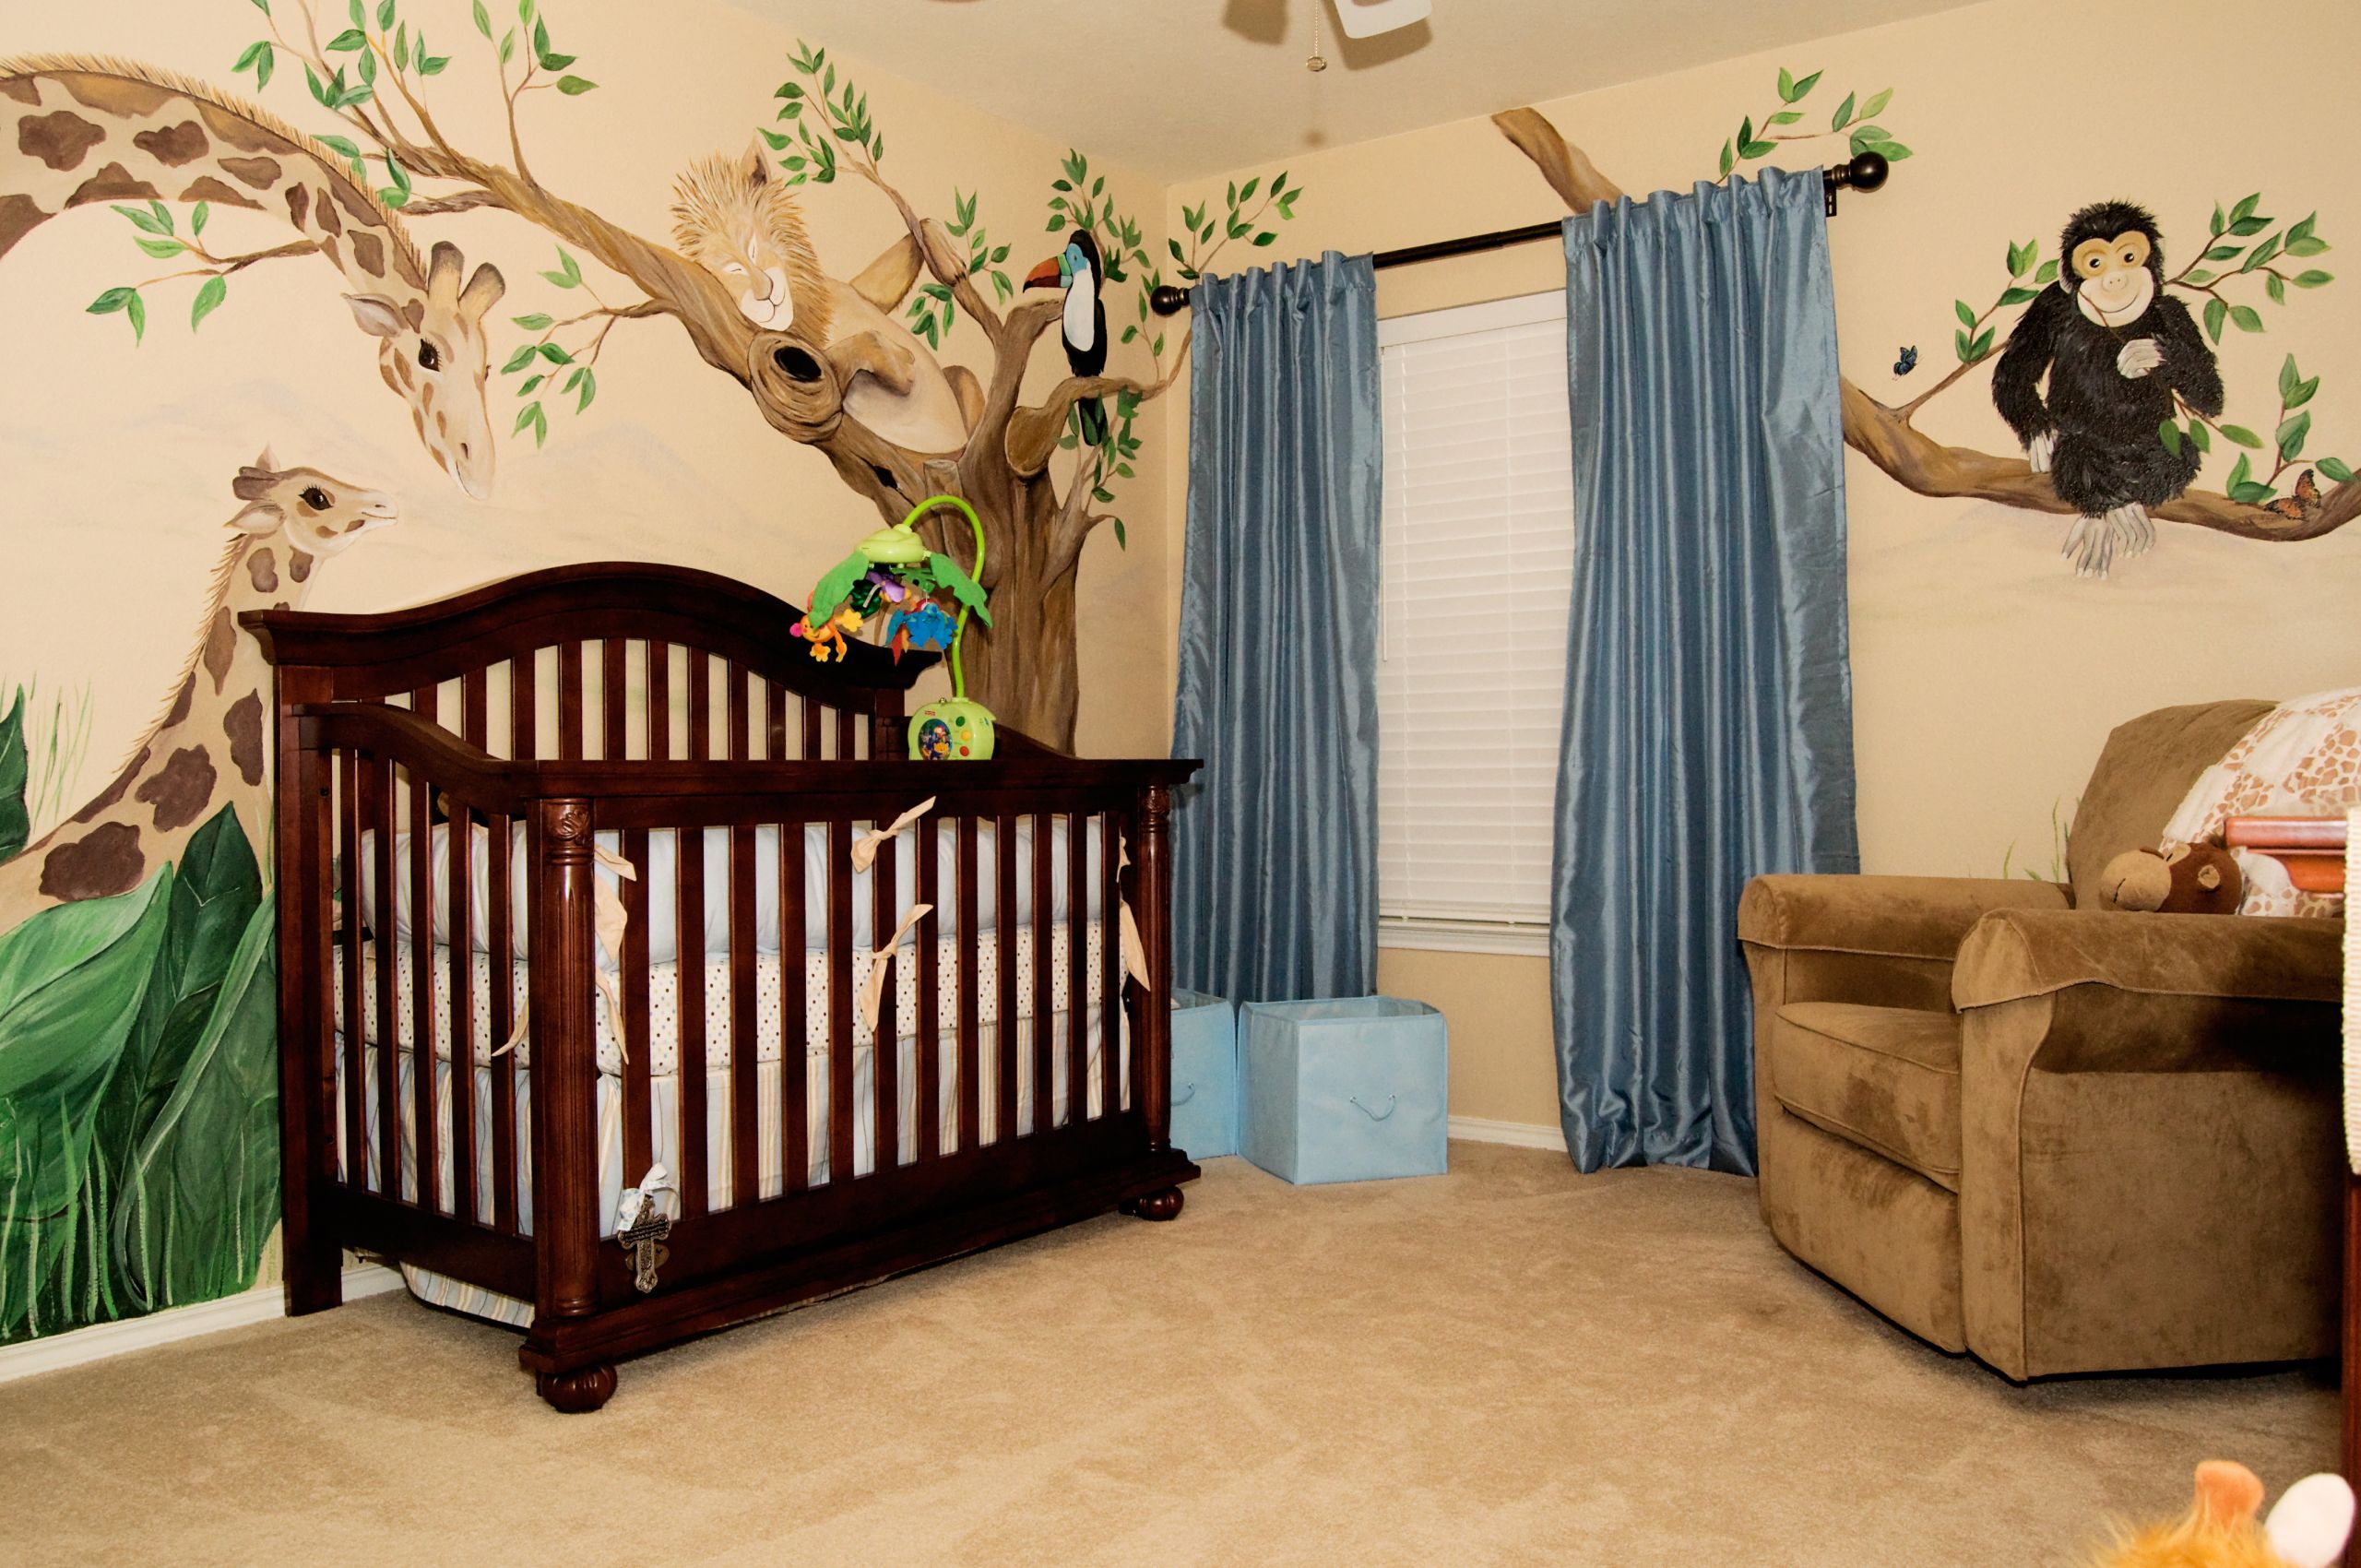 Jungle Baby Room Decor
 Adorable Baby Room Décor Ideas